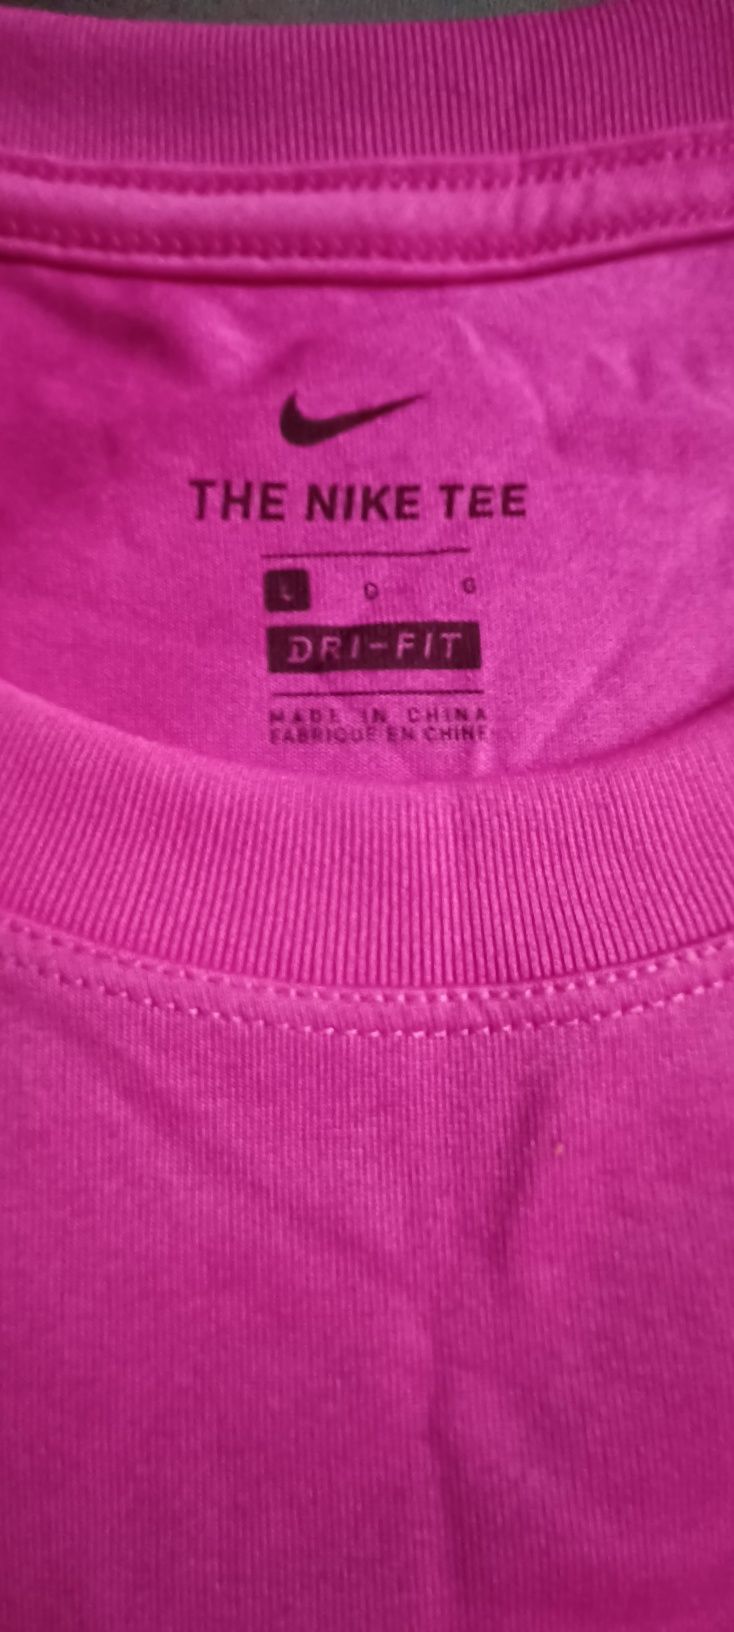 Koszulka L Nike. Nowa